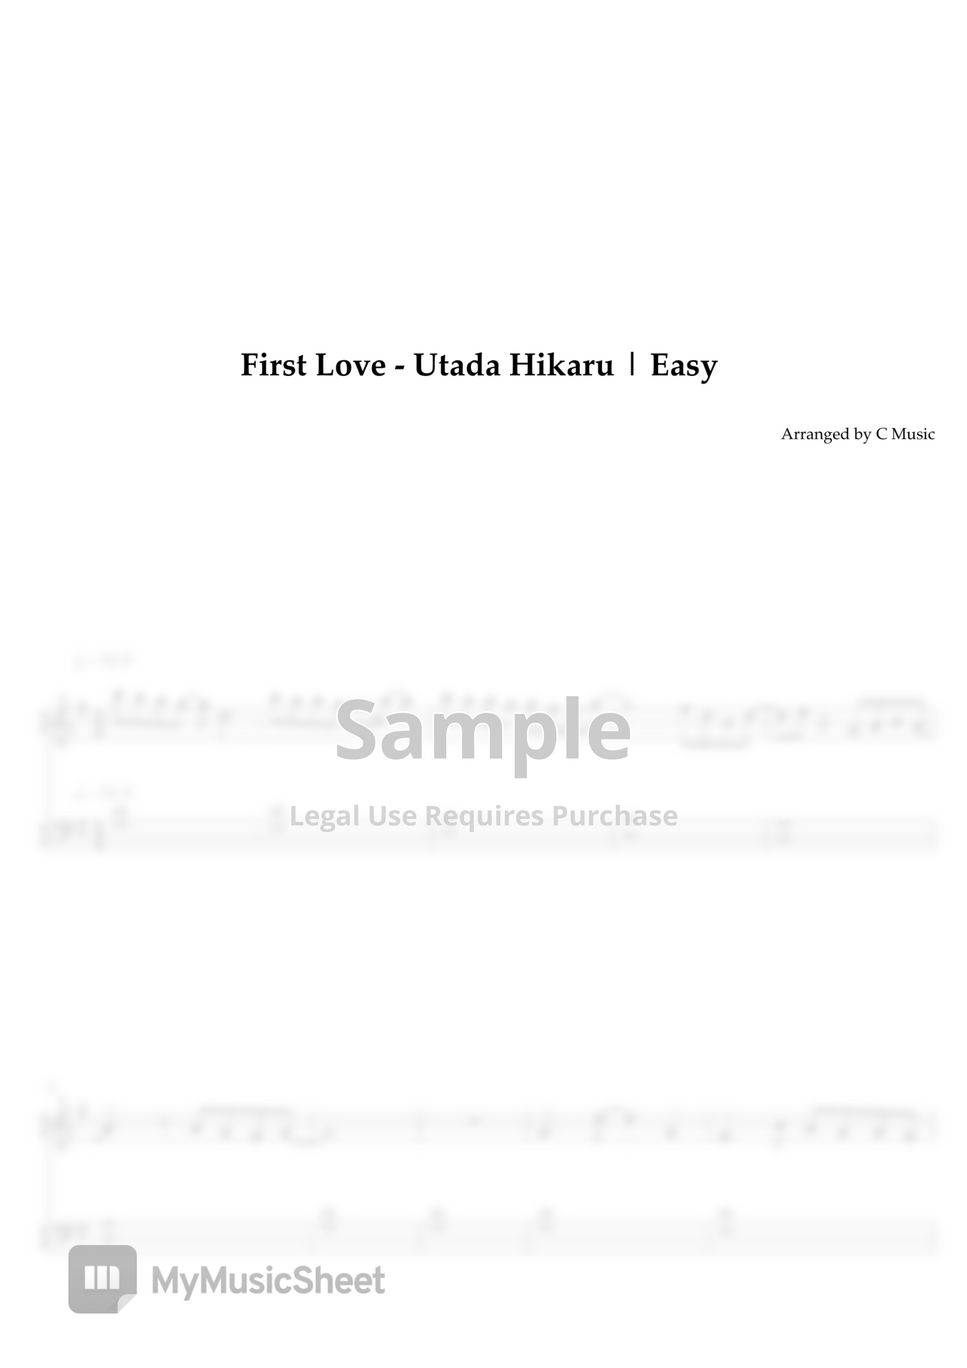 Hikaru Utada - First Love (Easy Version) by C Music